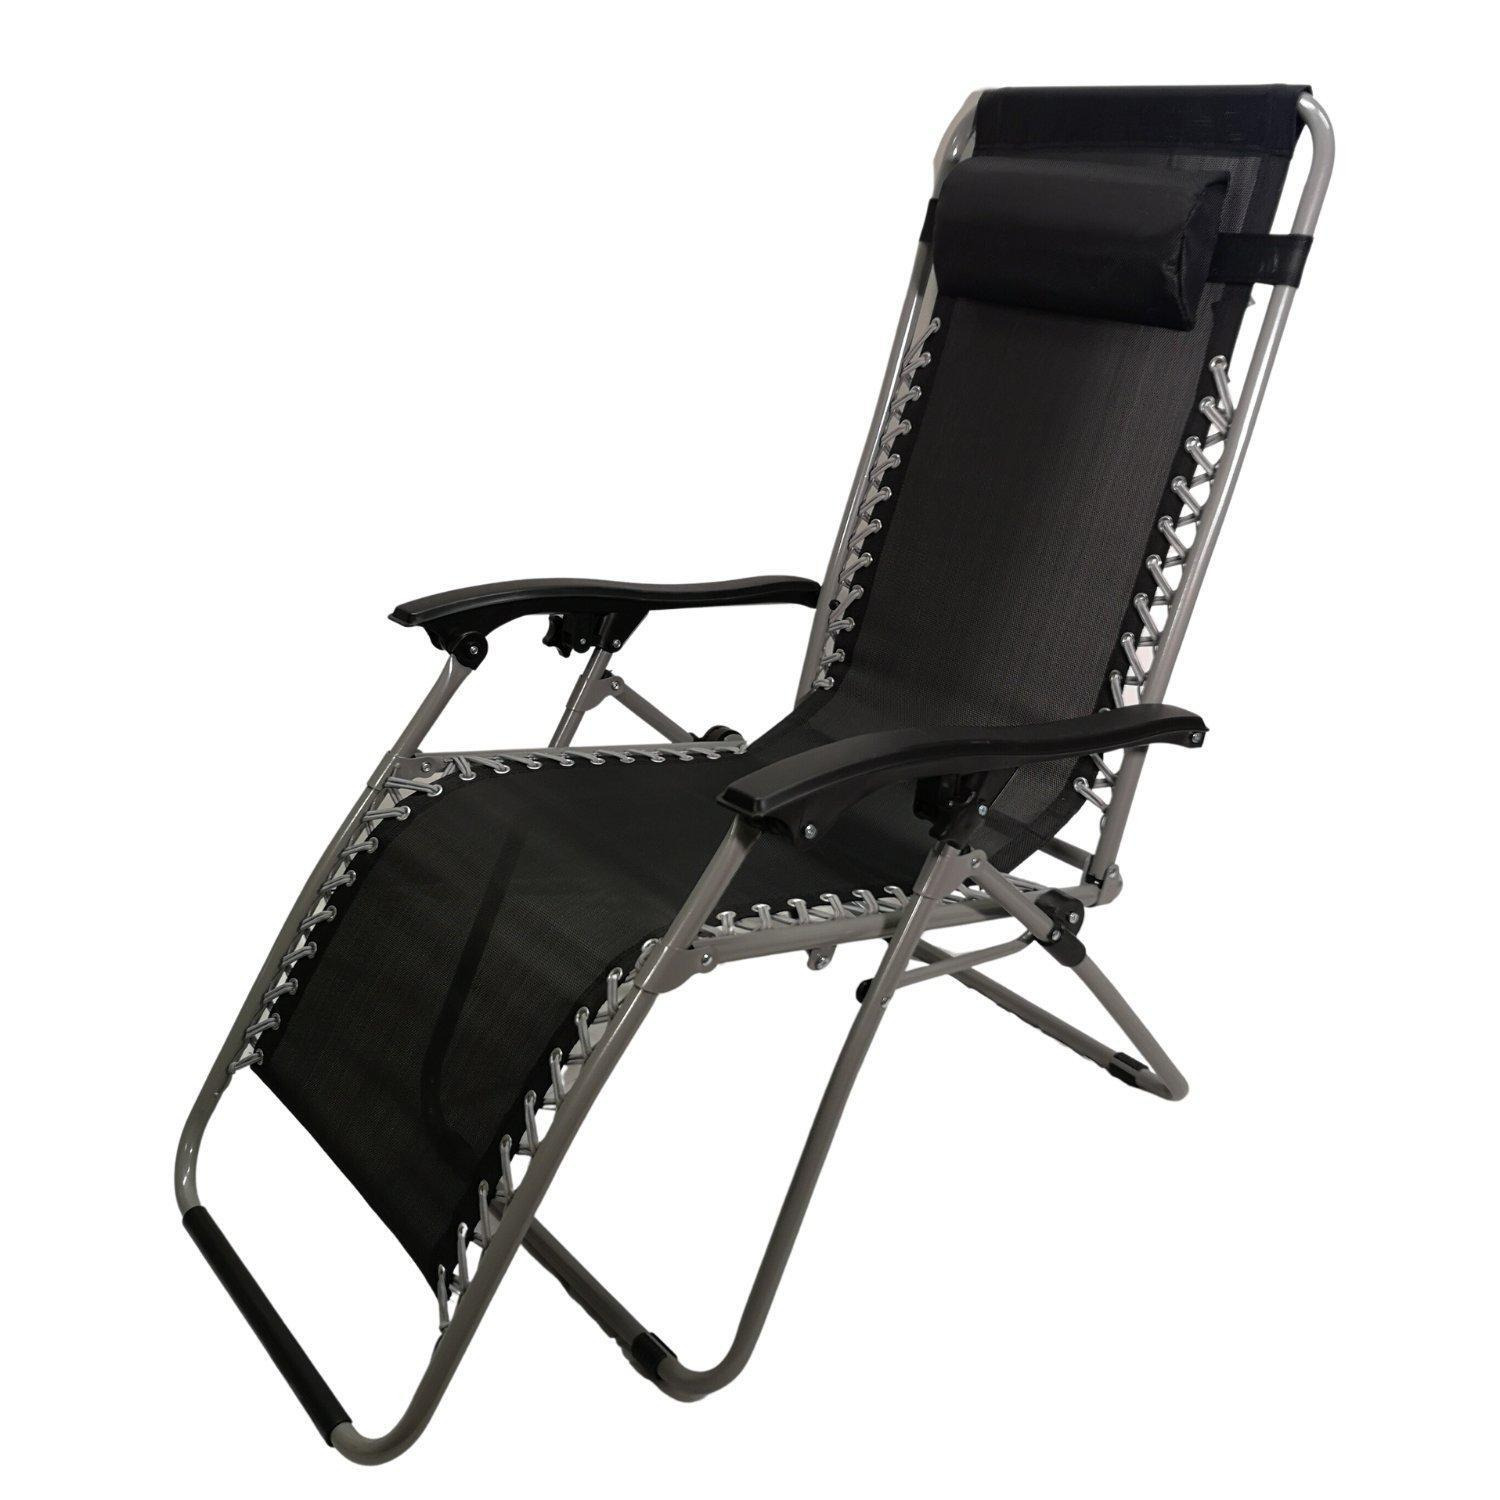 Multi Position Textoline Garden Zero Gravity Relaxer Chair Lounger -  Black Silver Frame - image 1